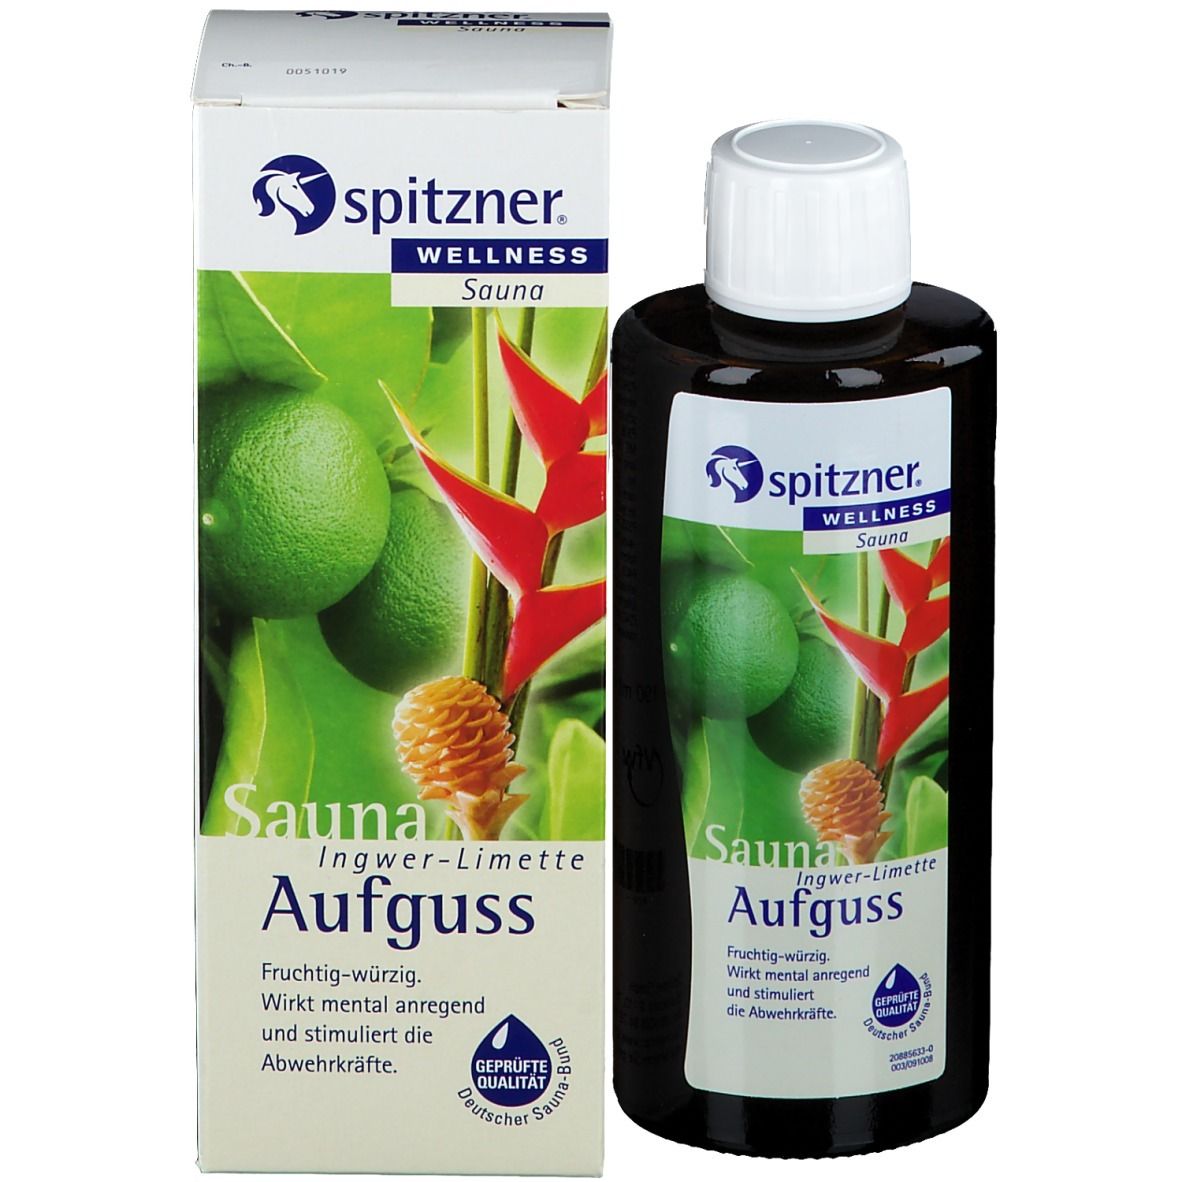 Spitzner® Wellness Saunaaufguss Ingwer-Limette